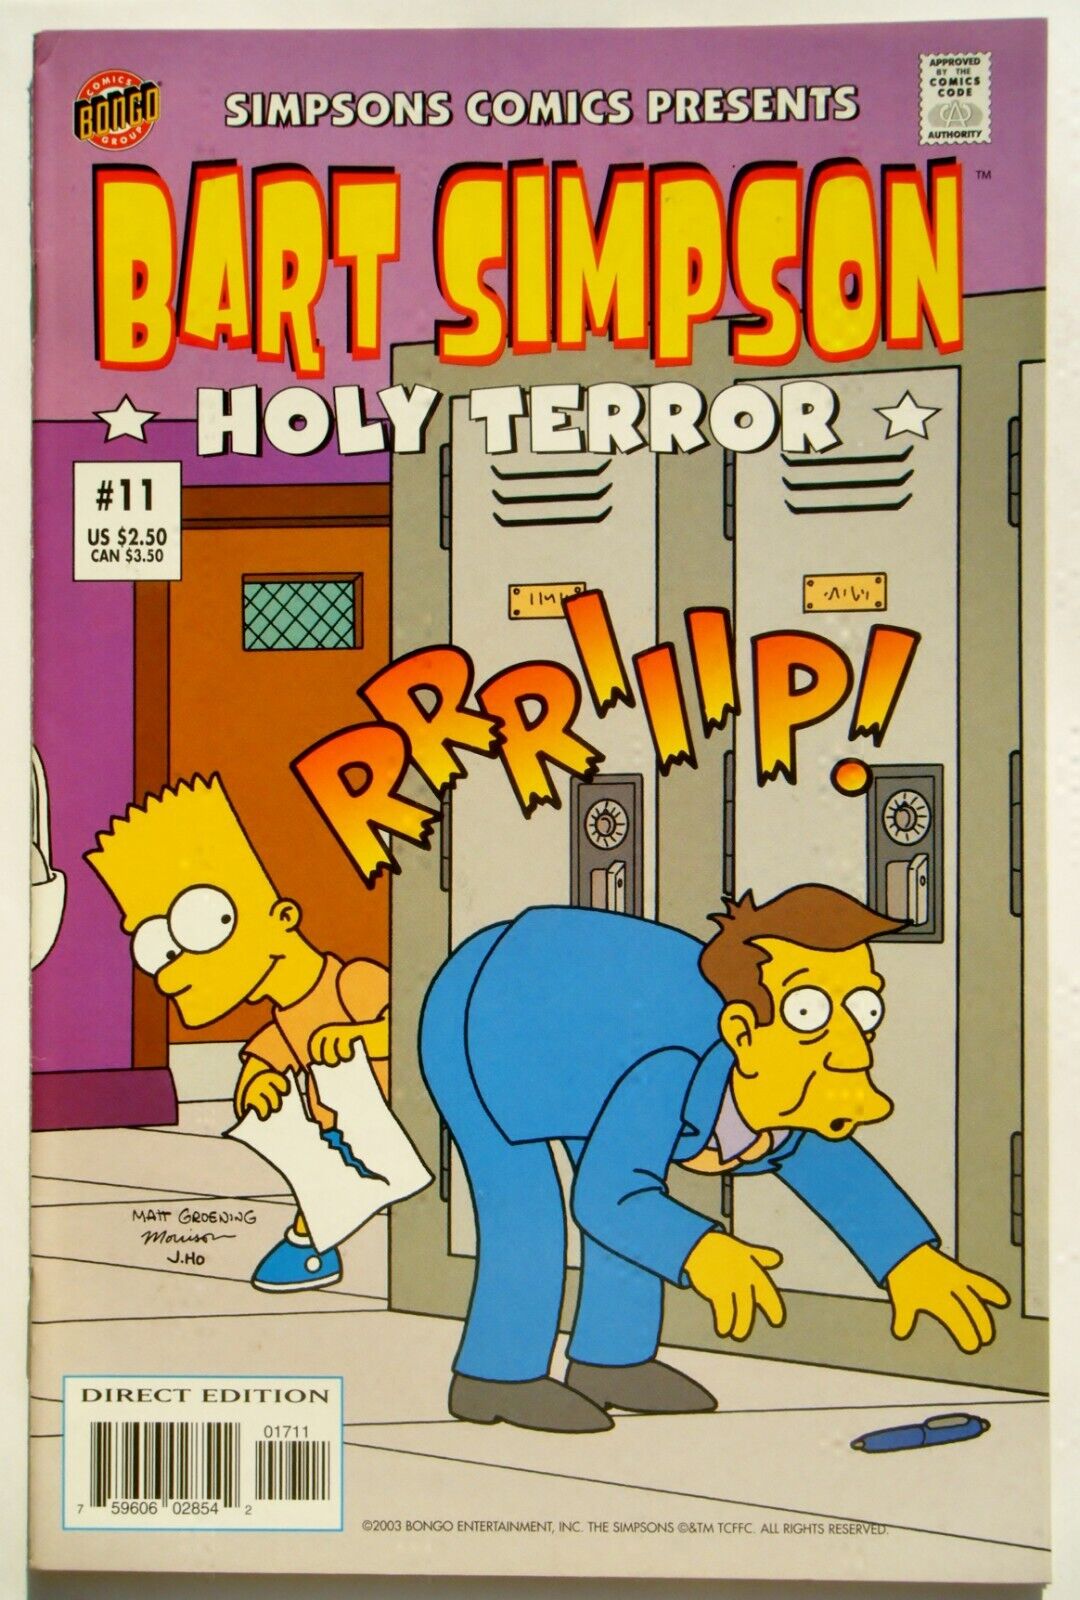 Simpsons Comics Presents Bart Simpson #11 (Apr. 03\') VF+ NM- (9.0) Holy Terror